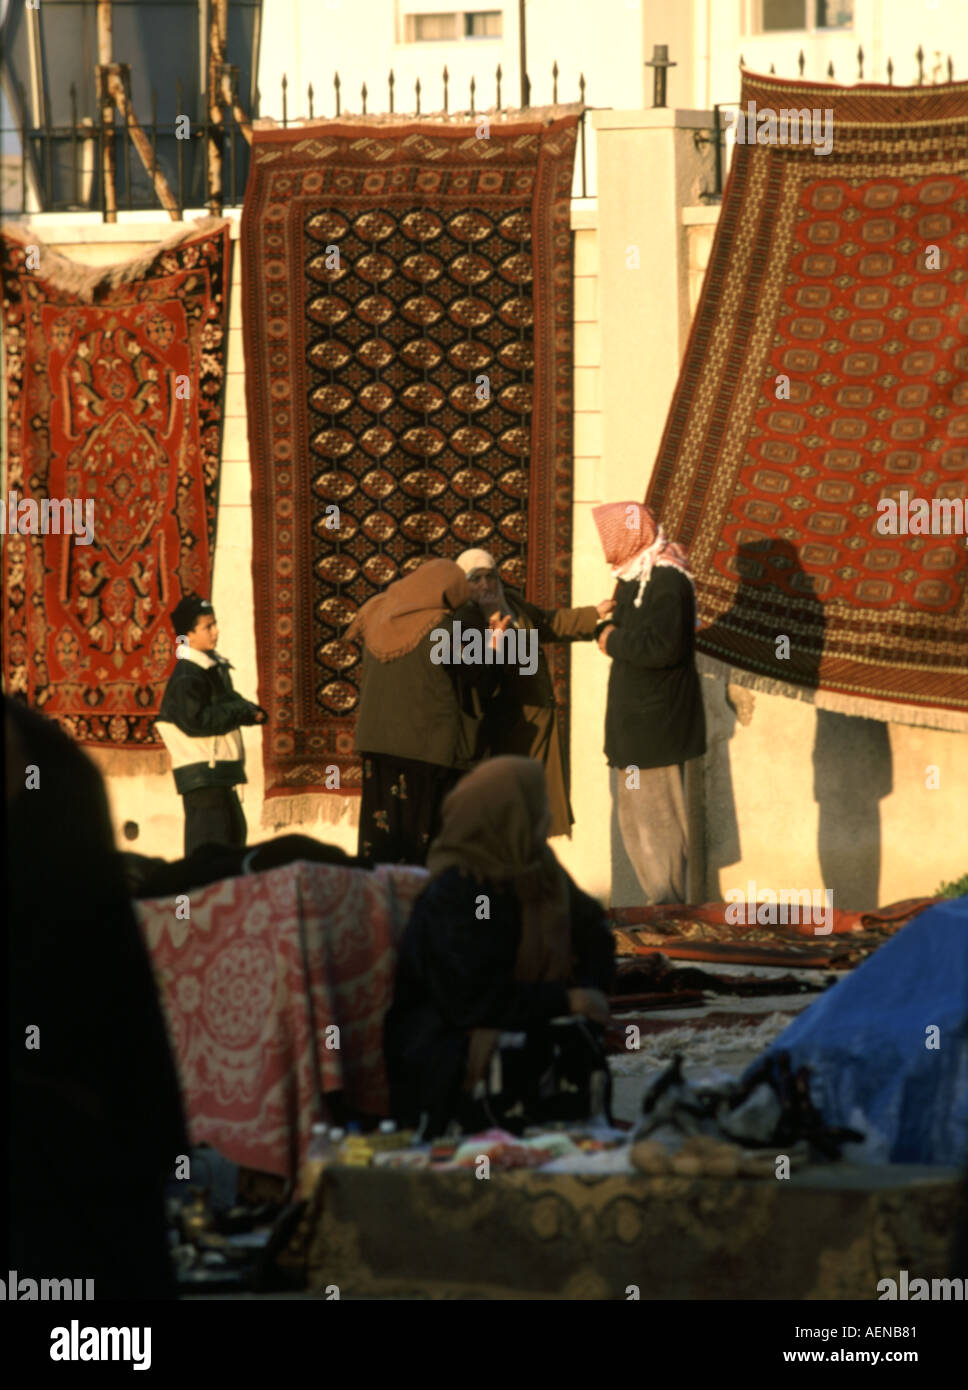 Rugs hung for sale by Muslim Haj pilgrims passing through Amman Jordan Stock Photo